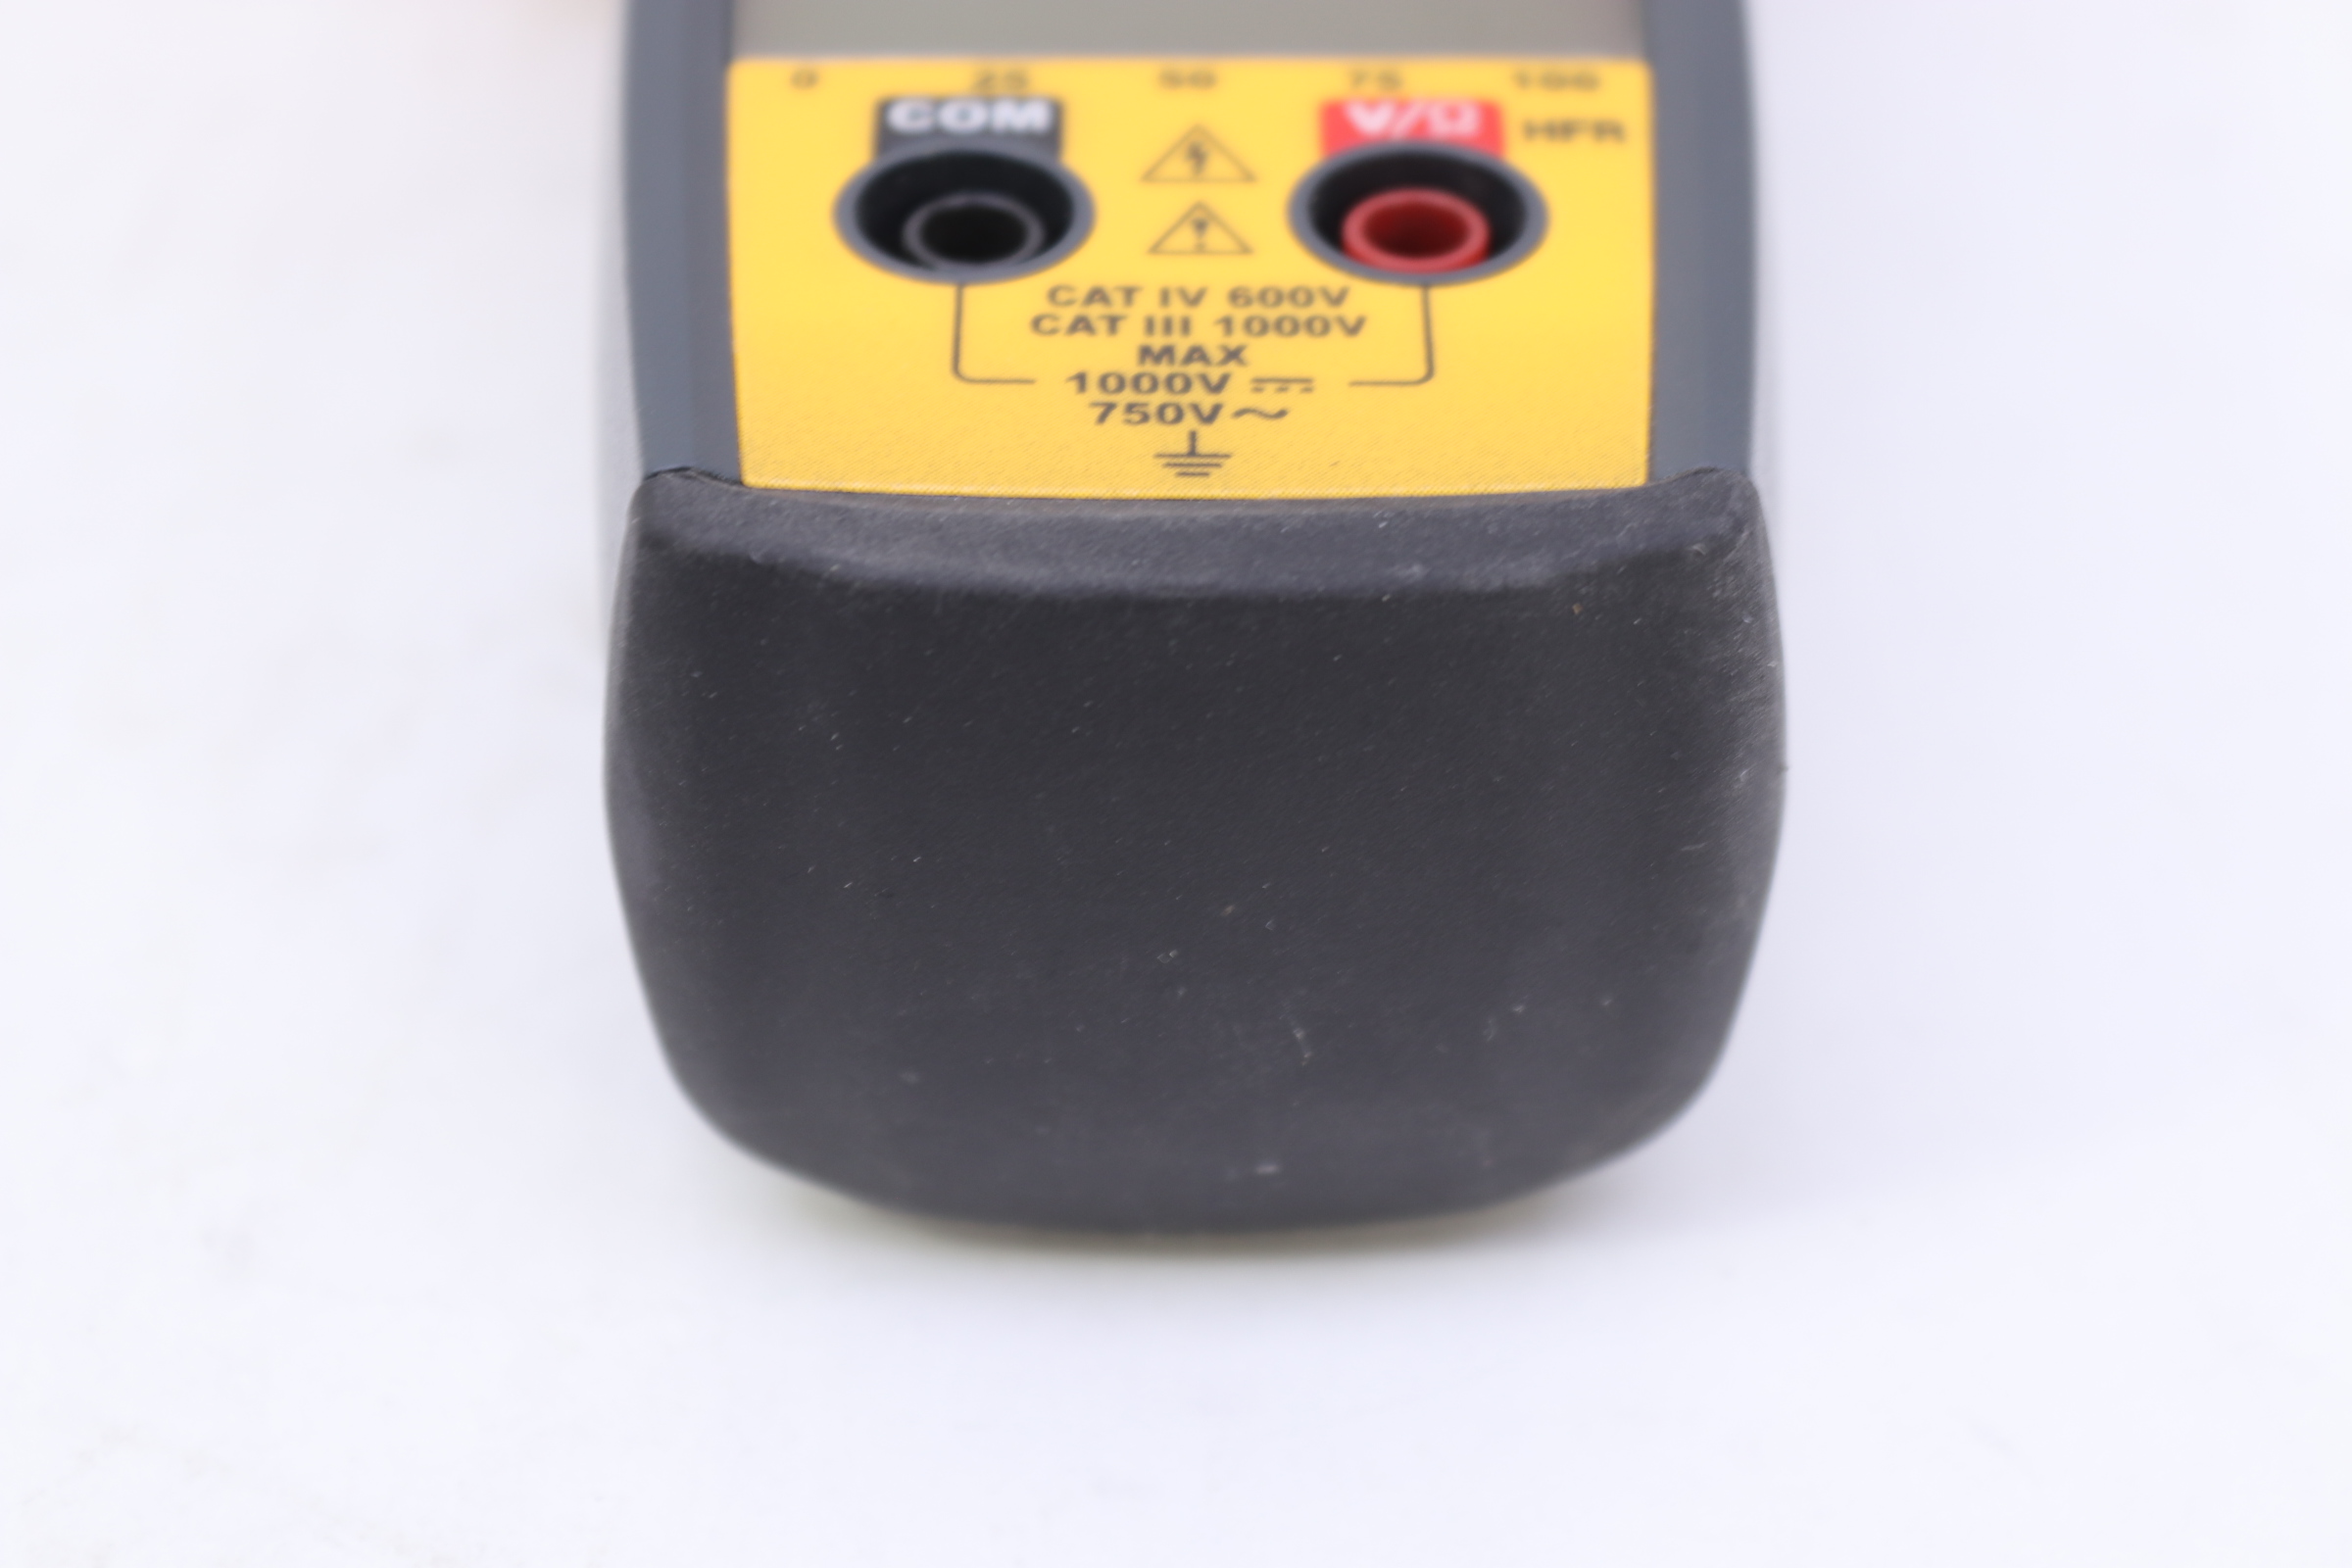 IDEAL Non-contact Digital Clamp Meter Multimeter 400 Amp 600-Volt